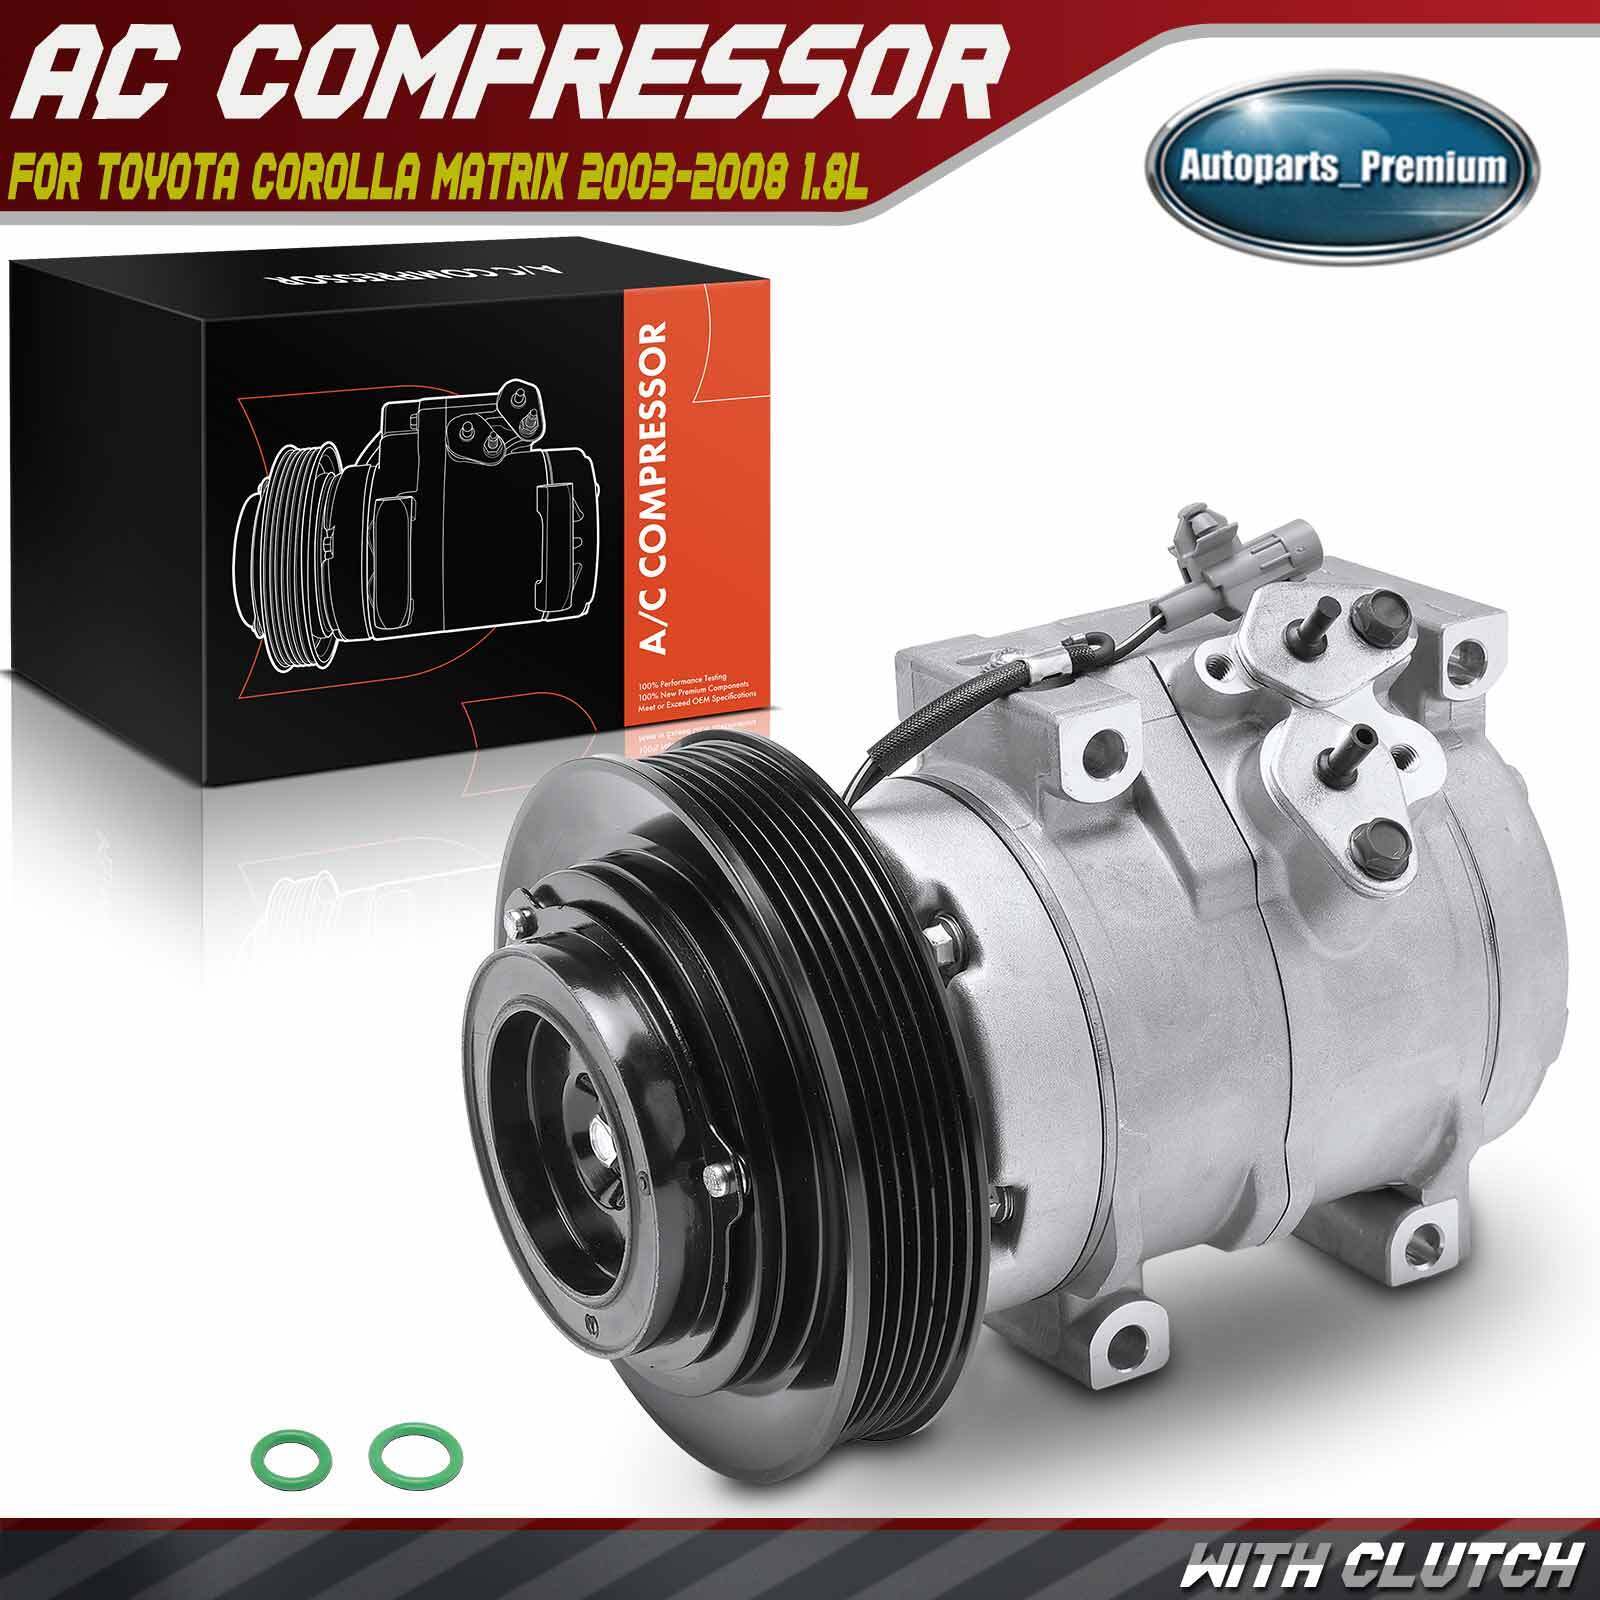 AC Compressor w/ Clutch for Toyota Corolla Matrix 2003-2008 L4 1.8L Sedan Wagon